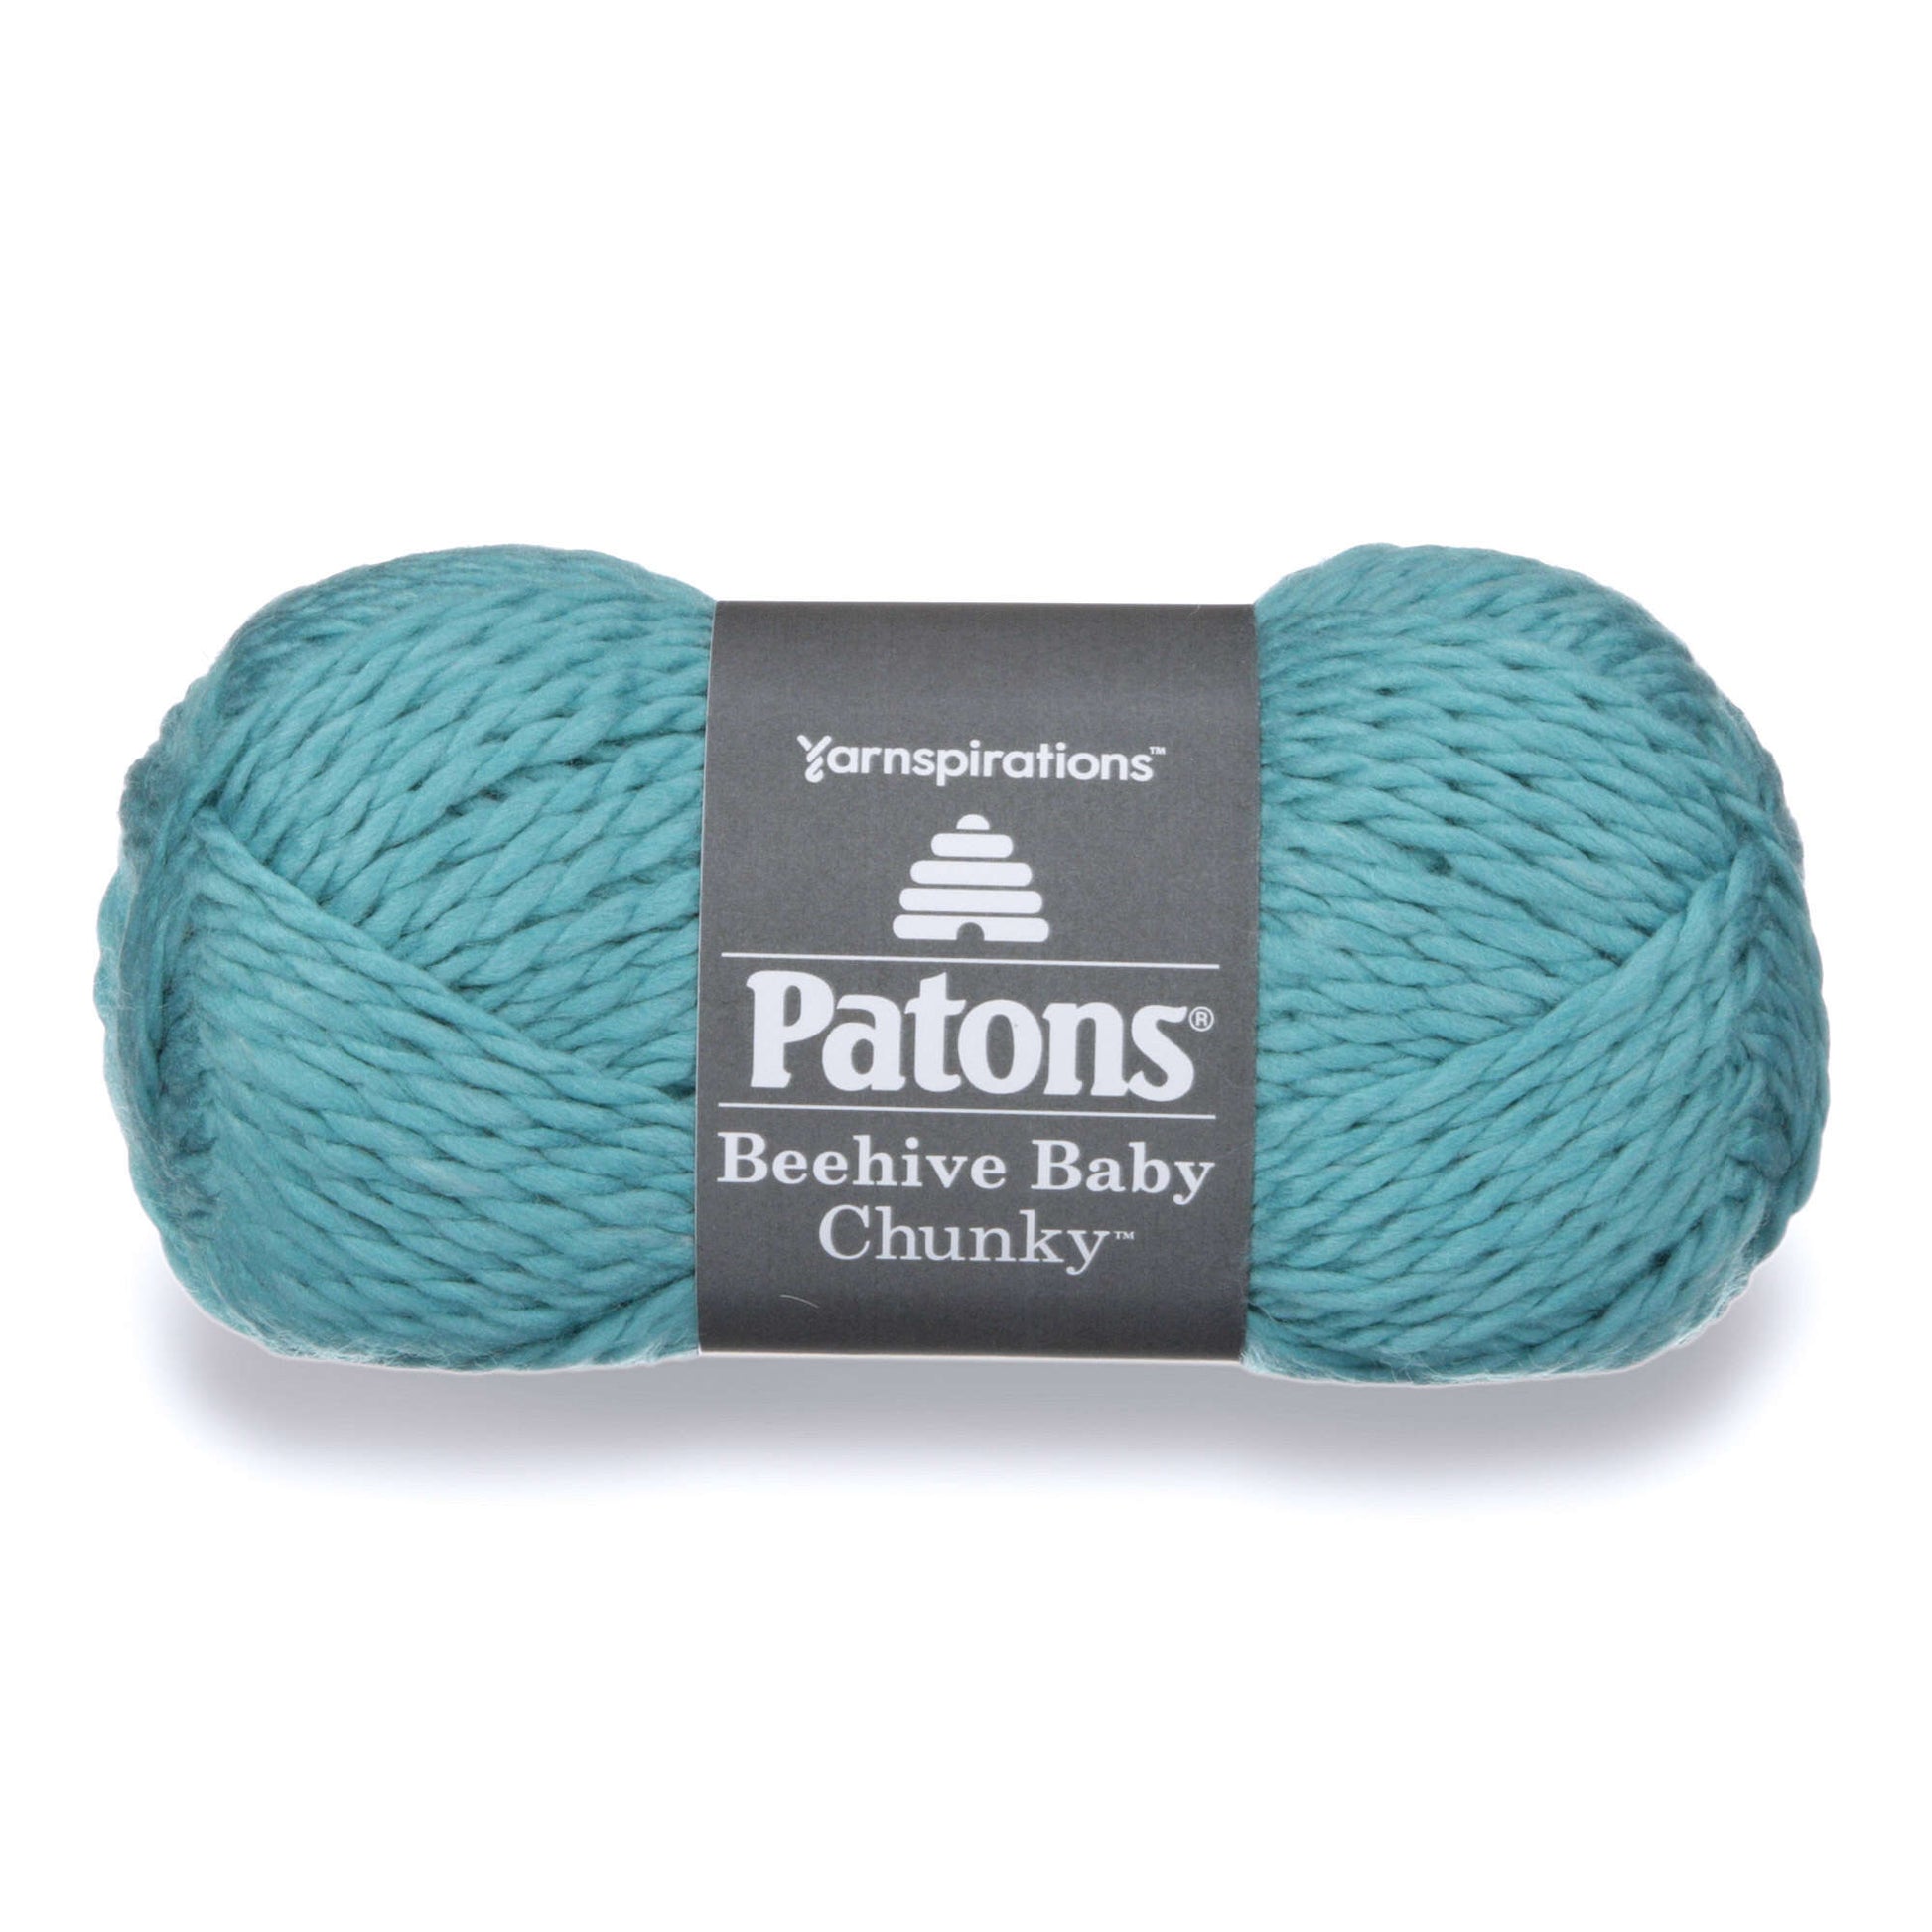 Patons Beehive Baby Chunky Yarn - Discontinued Shades